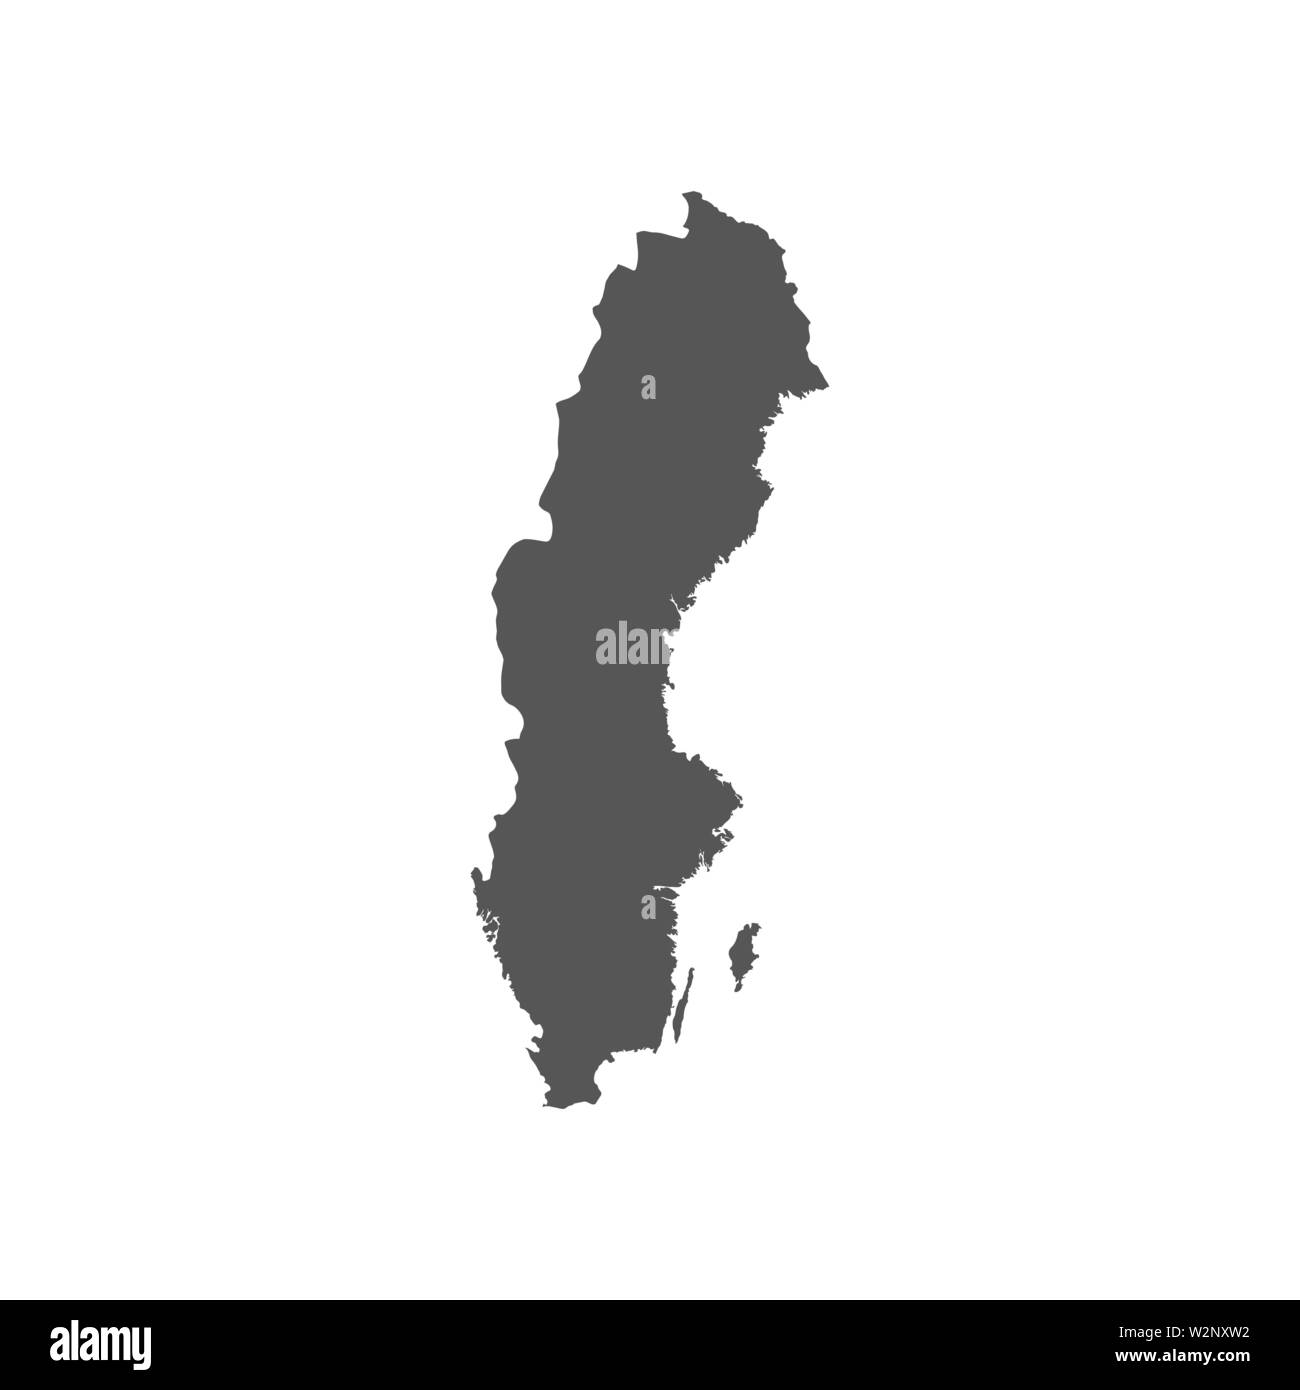 Sweden map sign background. Vector eps10 illustration Stock Vector